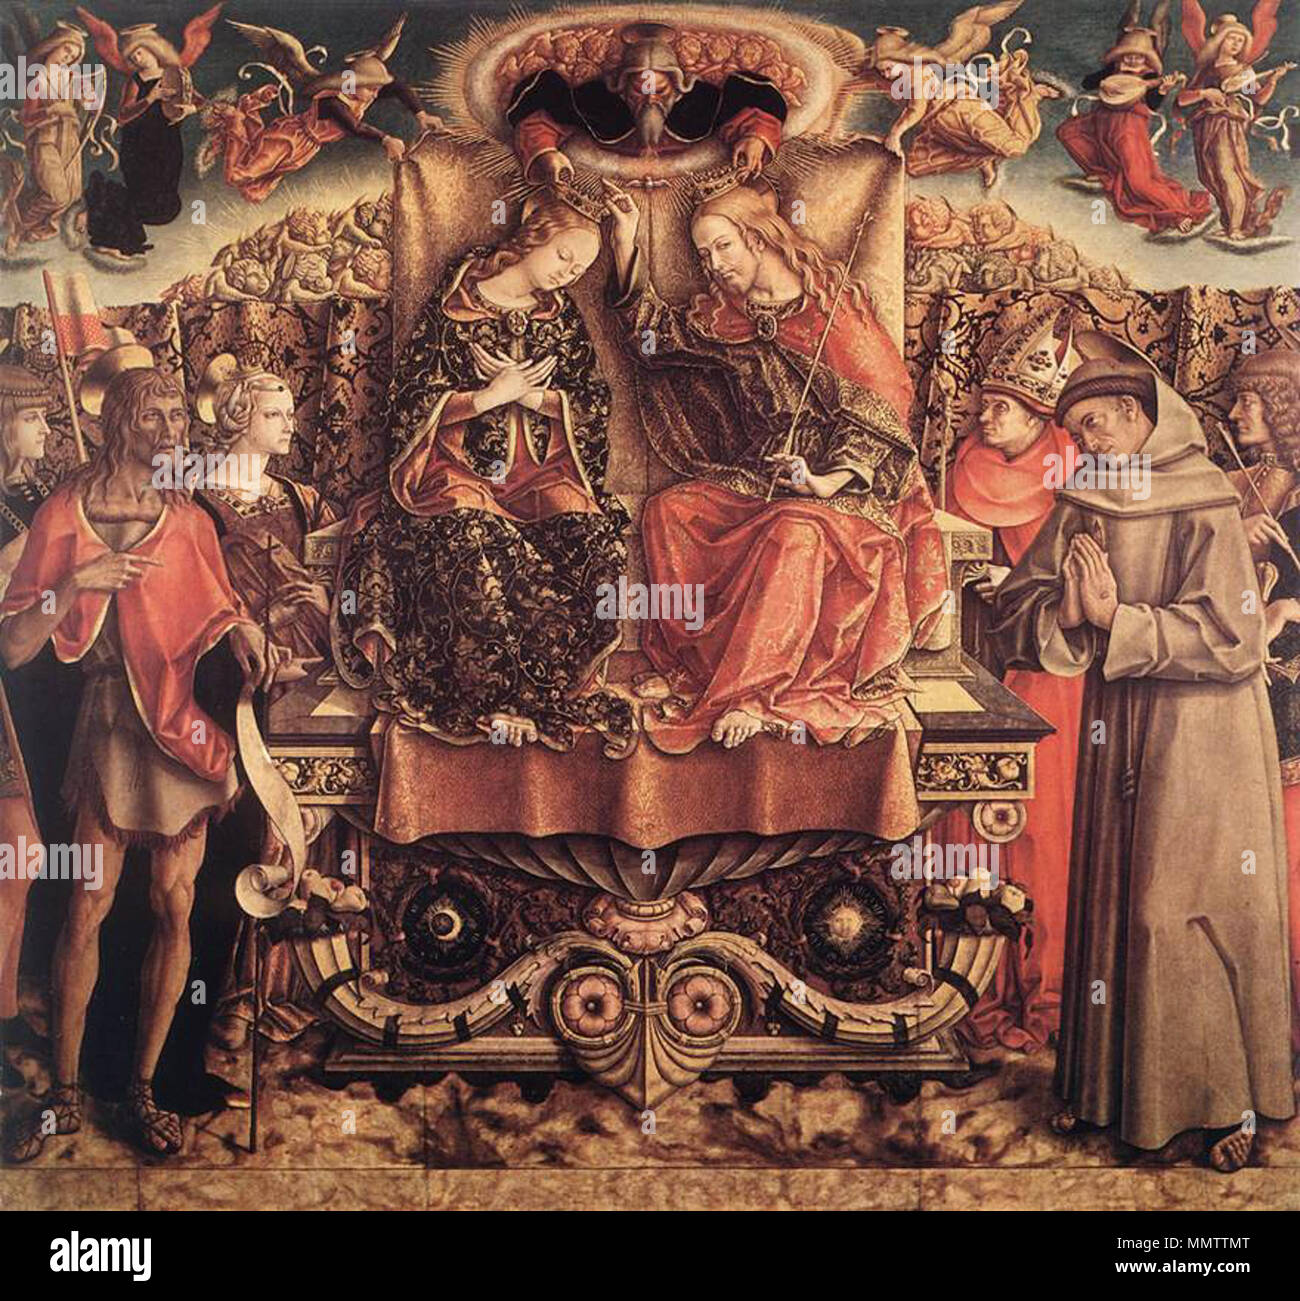 Coronation of the Virgin. 1493. Carlo Crivelli - Coronation of the Virgin - WGA5783 Stock Photo